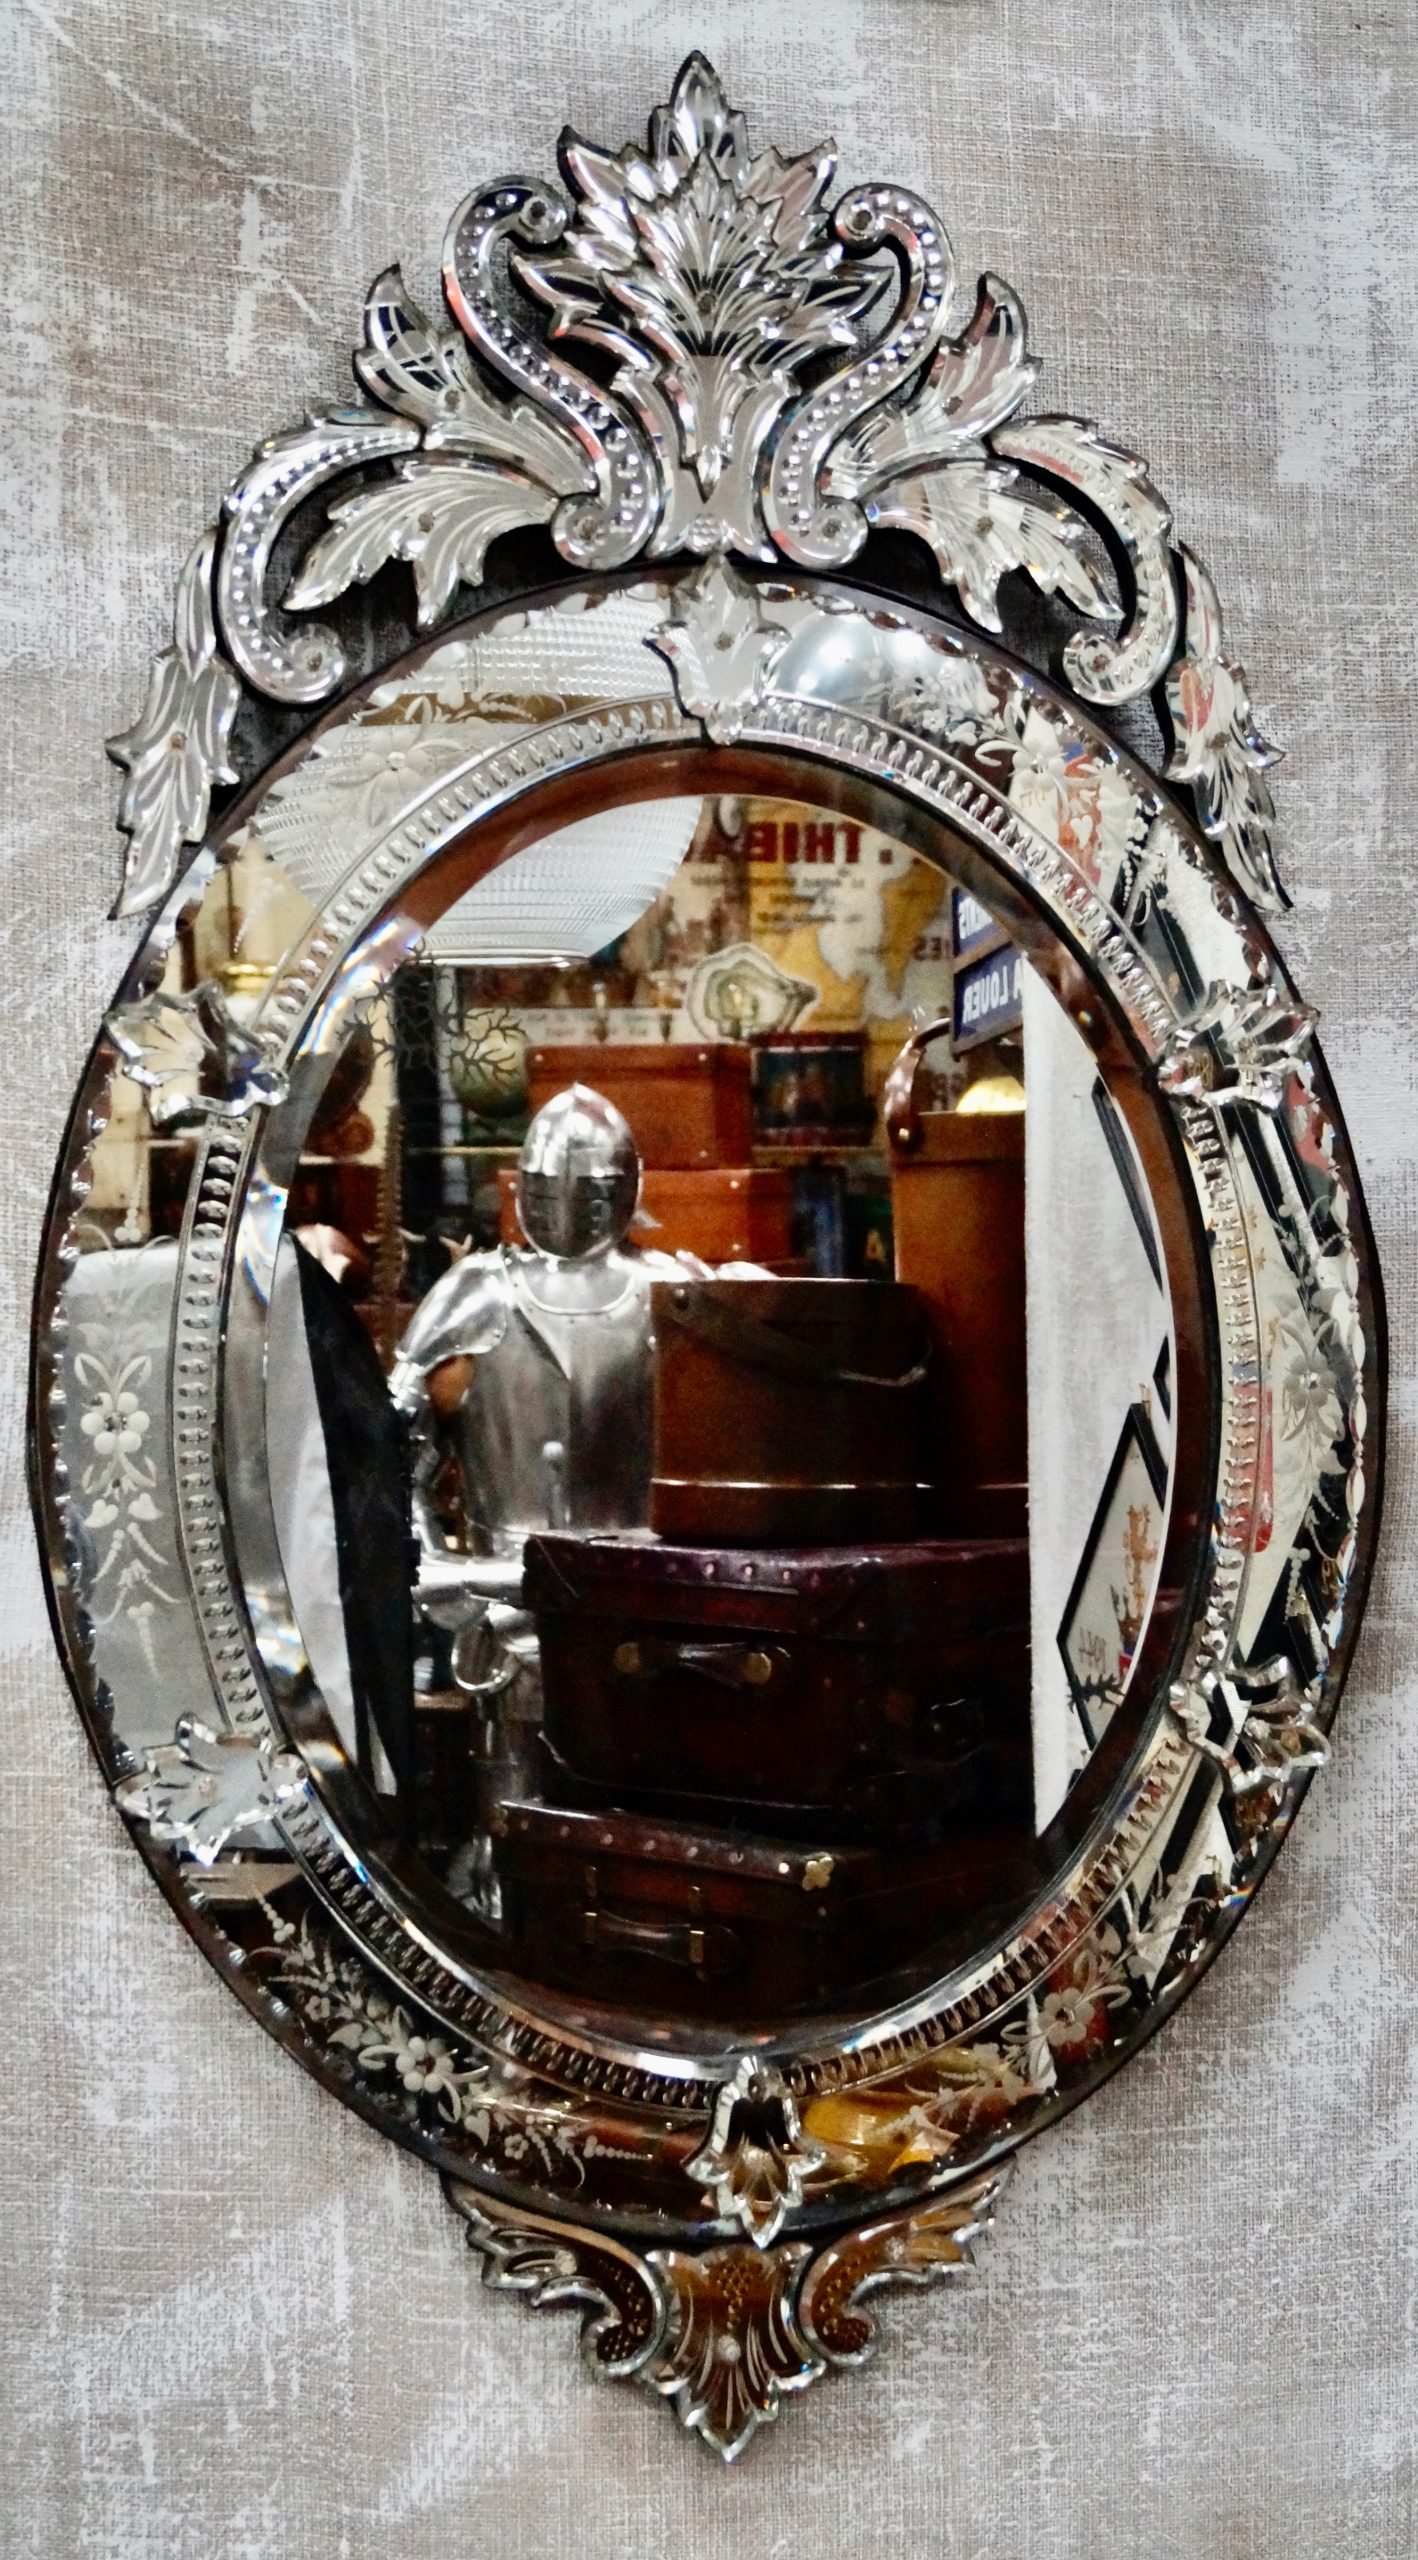 Antique Venetian Mirror: Timeless Elegance Of Reflection